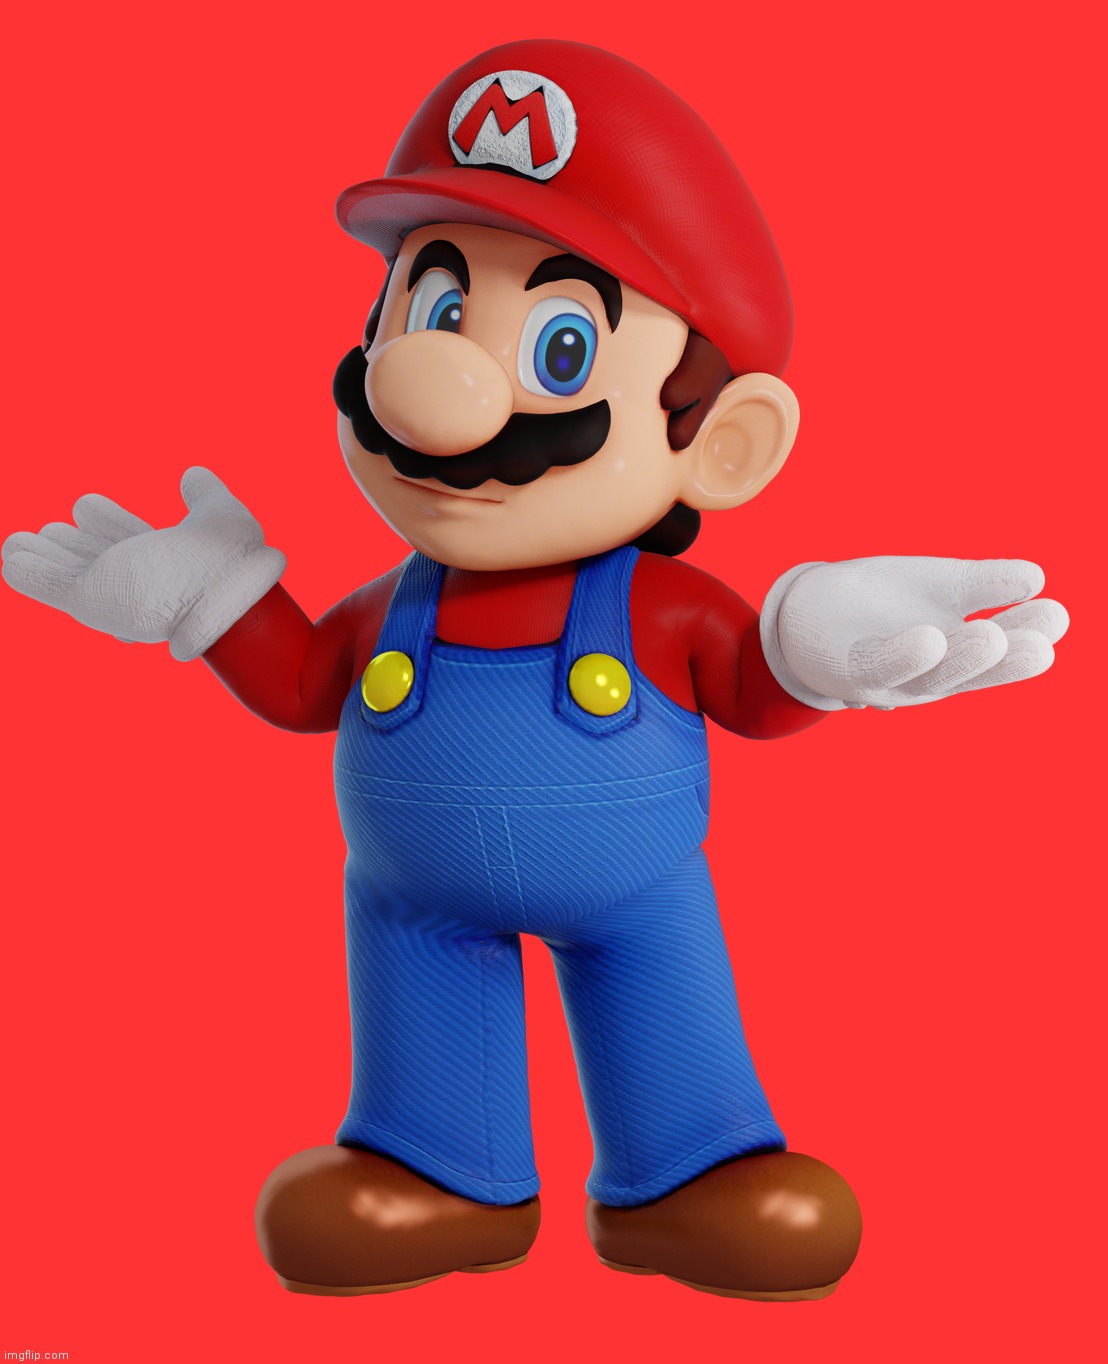 Mario shrug | image tagged in mario shrug | made w/ Imgflip meme maker